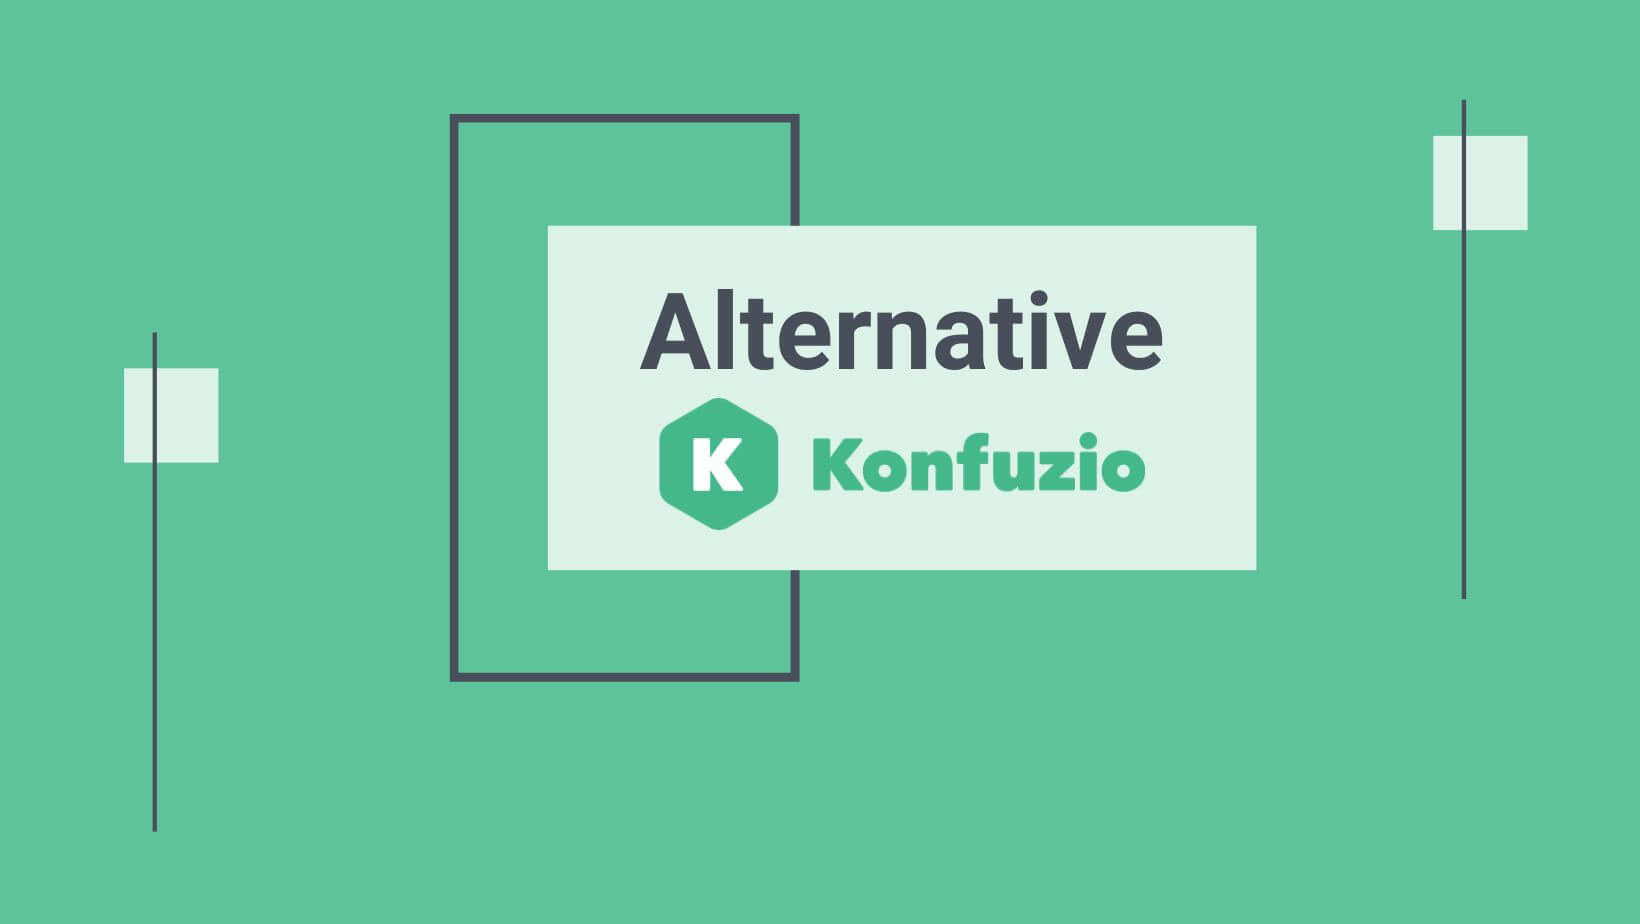 Konfuzio logo on green background, alternative